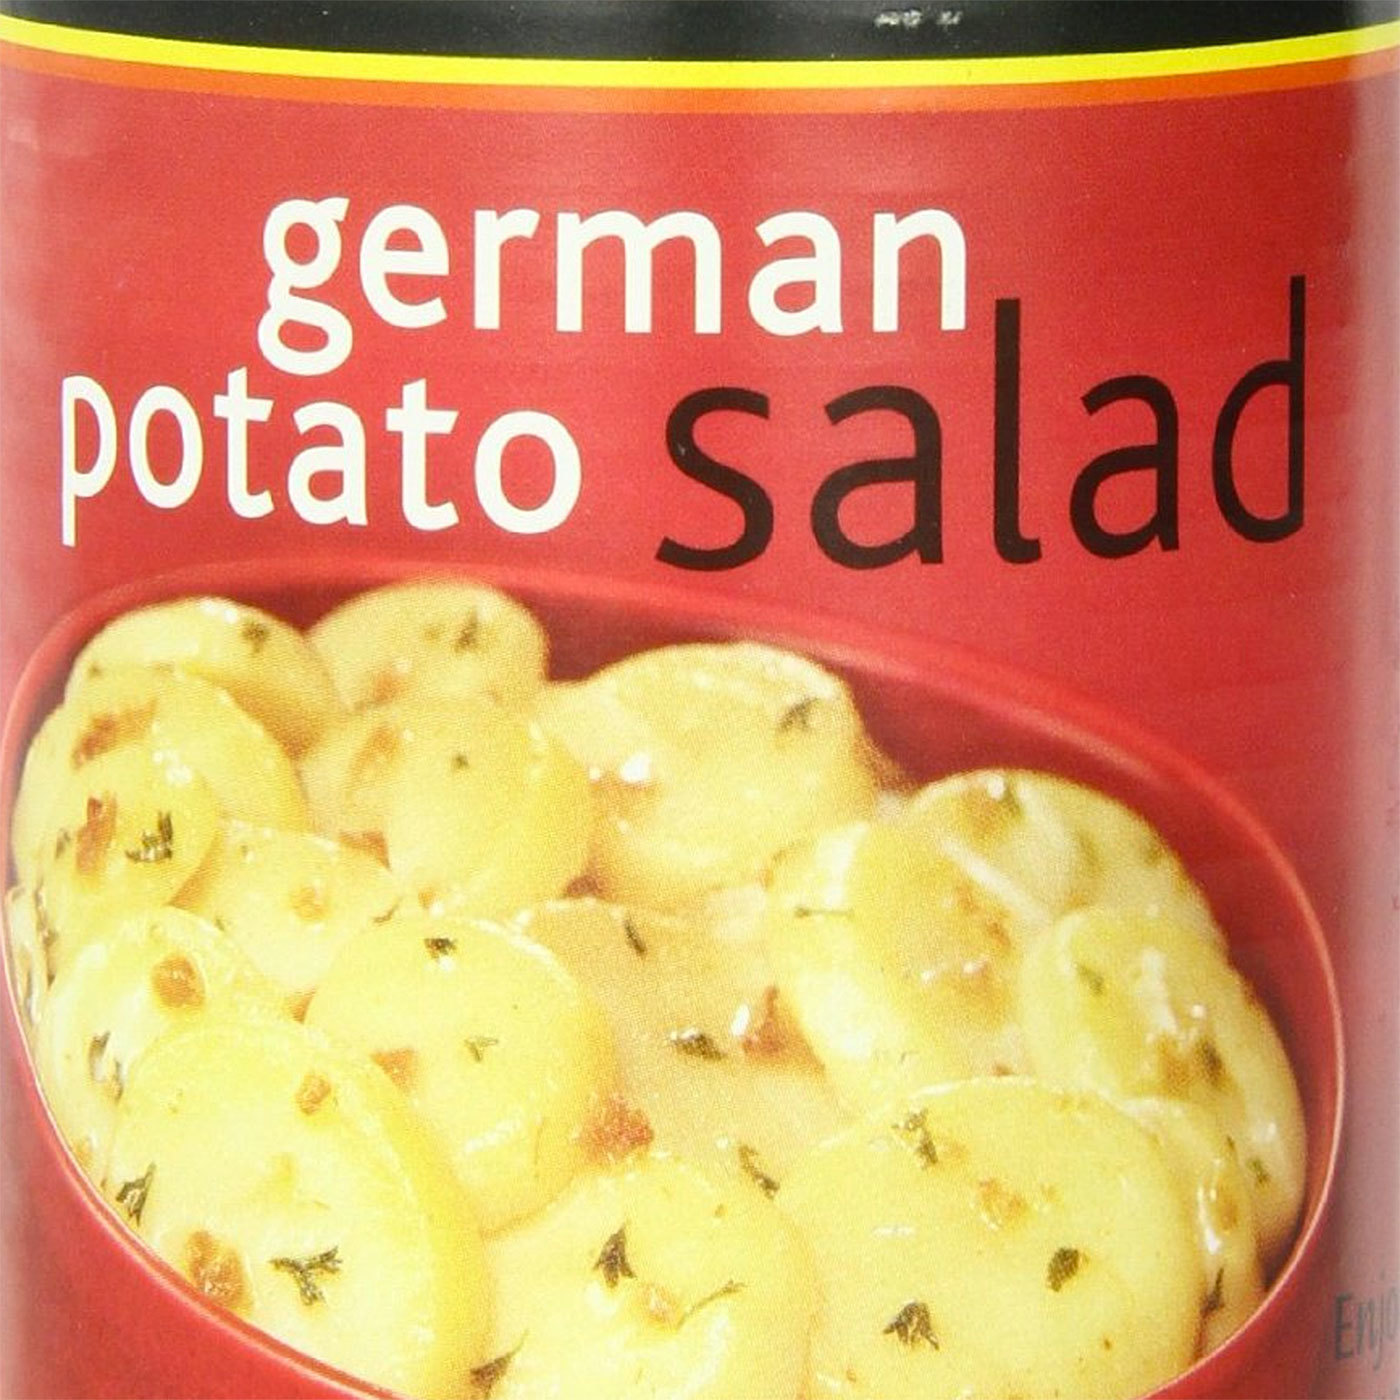 66: German Potato Salad Image